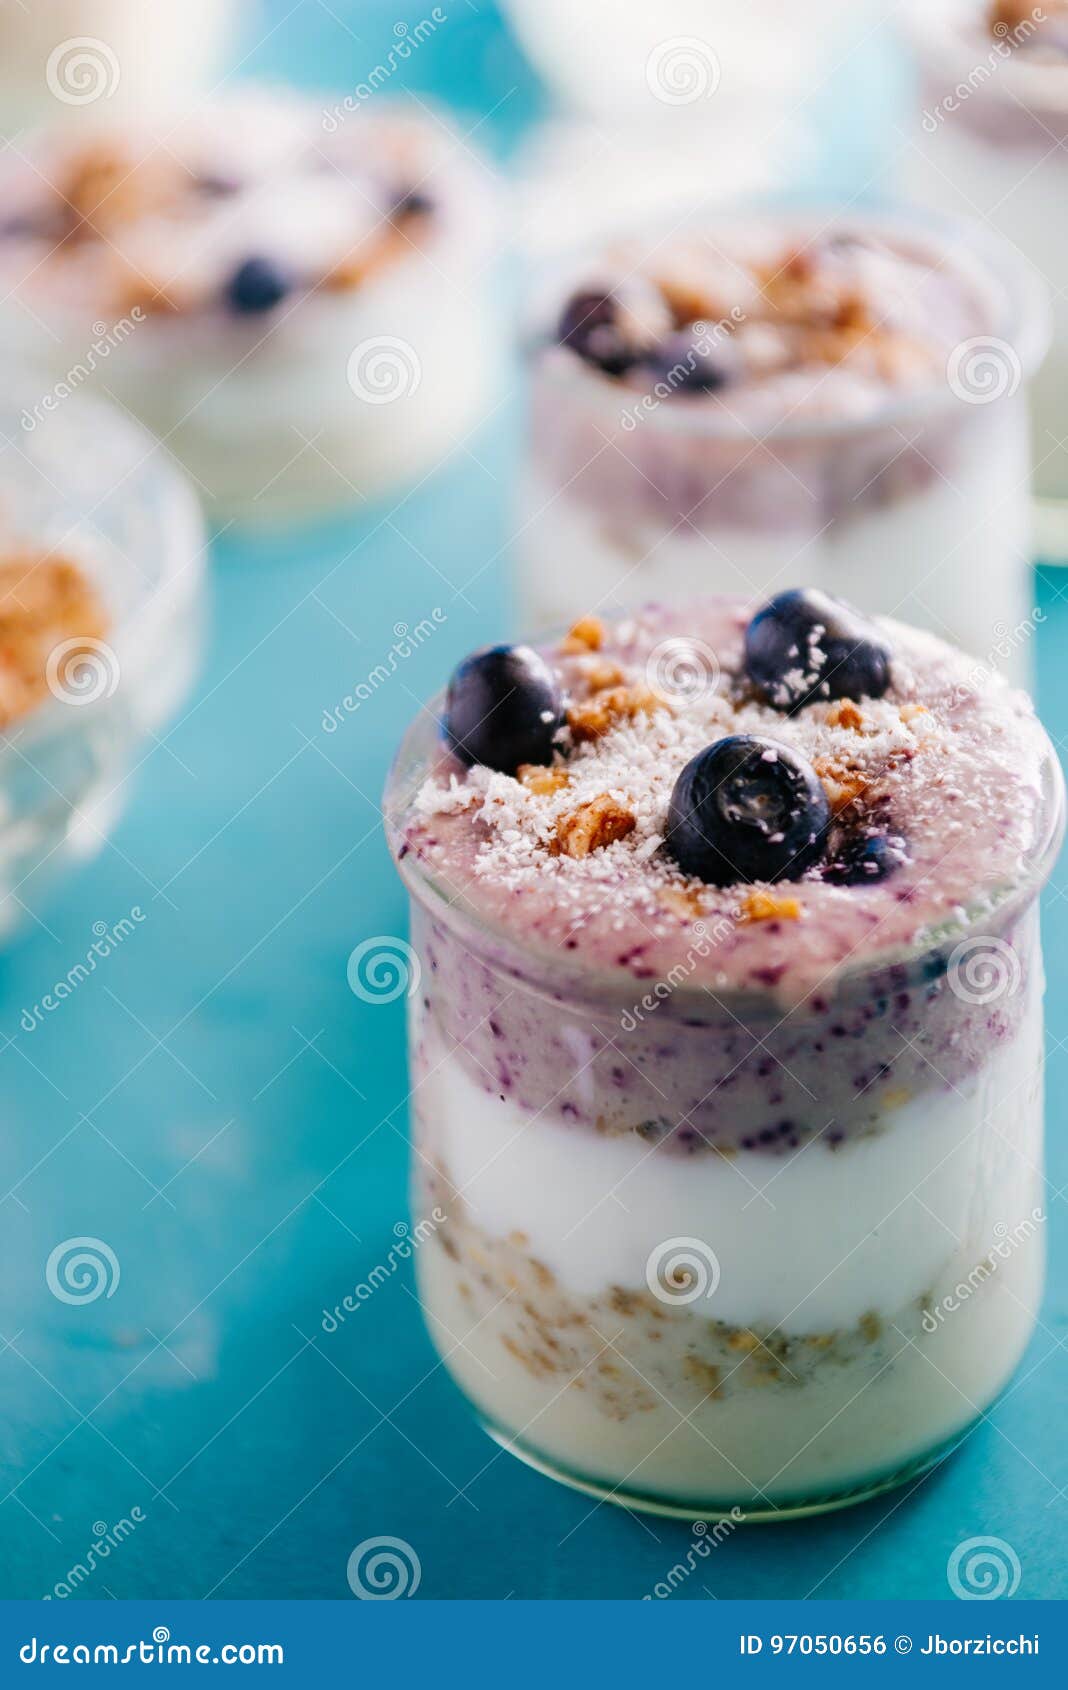 Yogurt parfait stock photo. Image of blue, eaten, cereal - 97050656